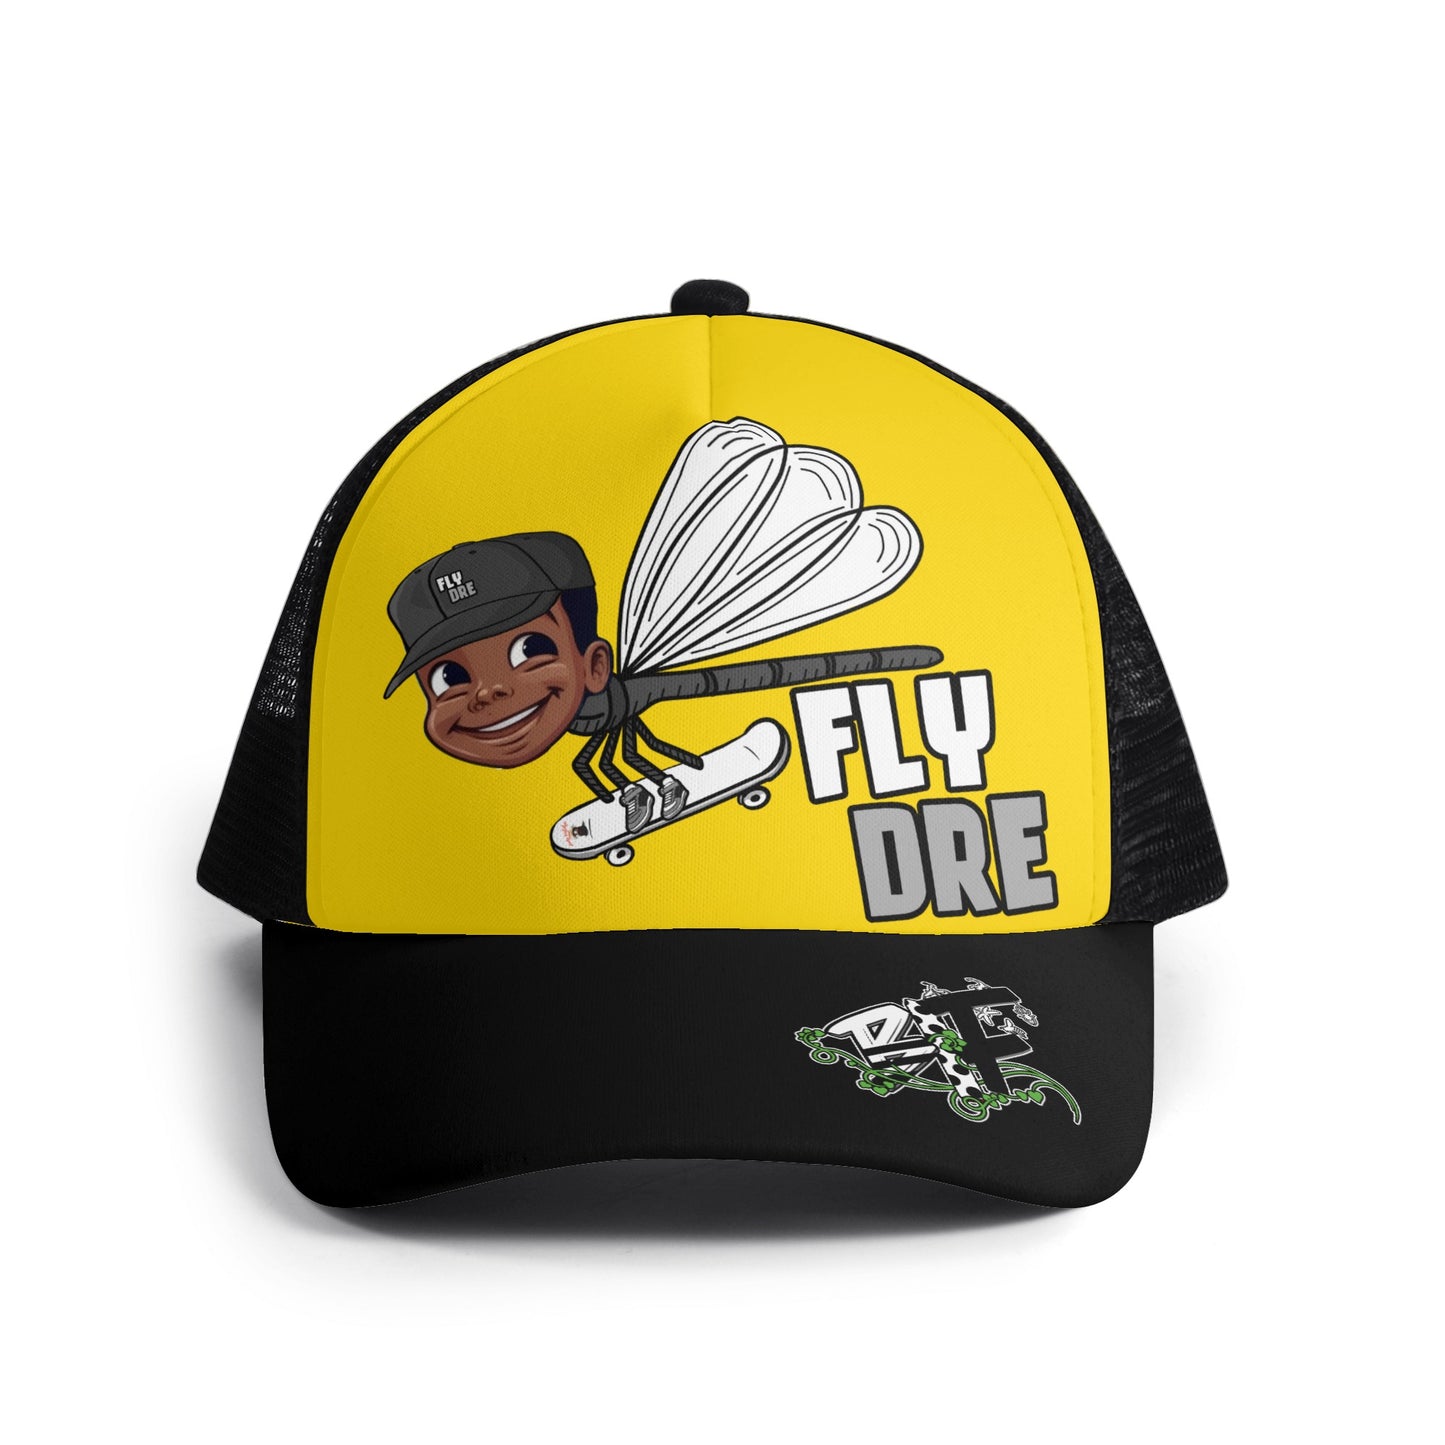 Fly Dre Kids Front Printing Mesh Baseball Caps